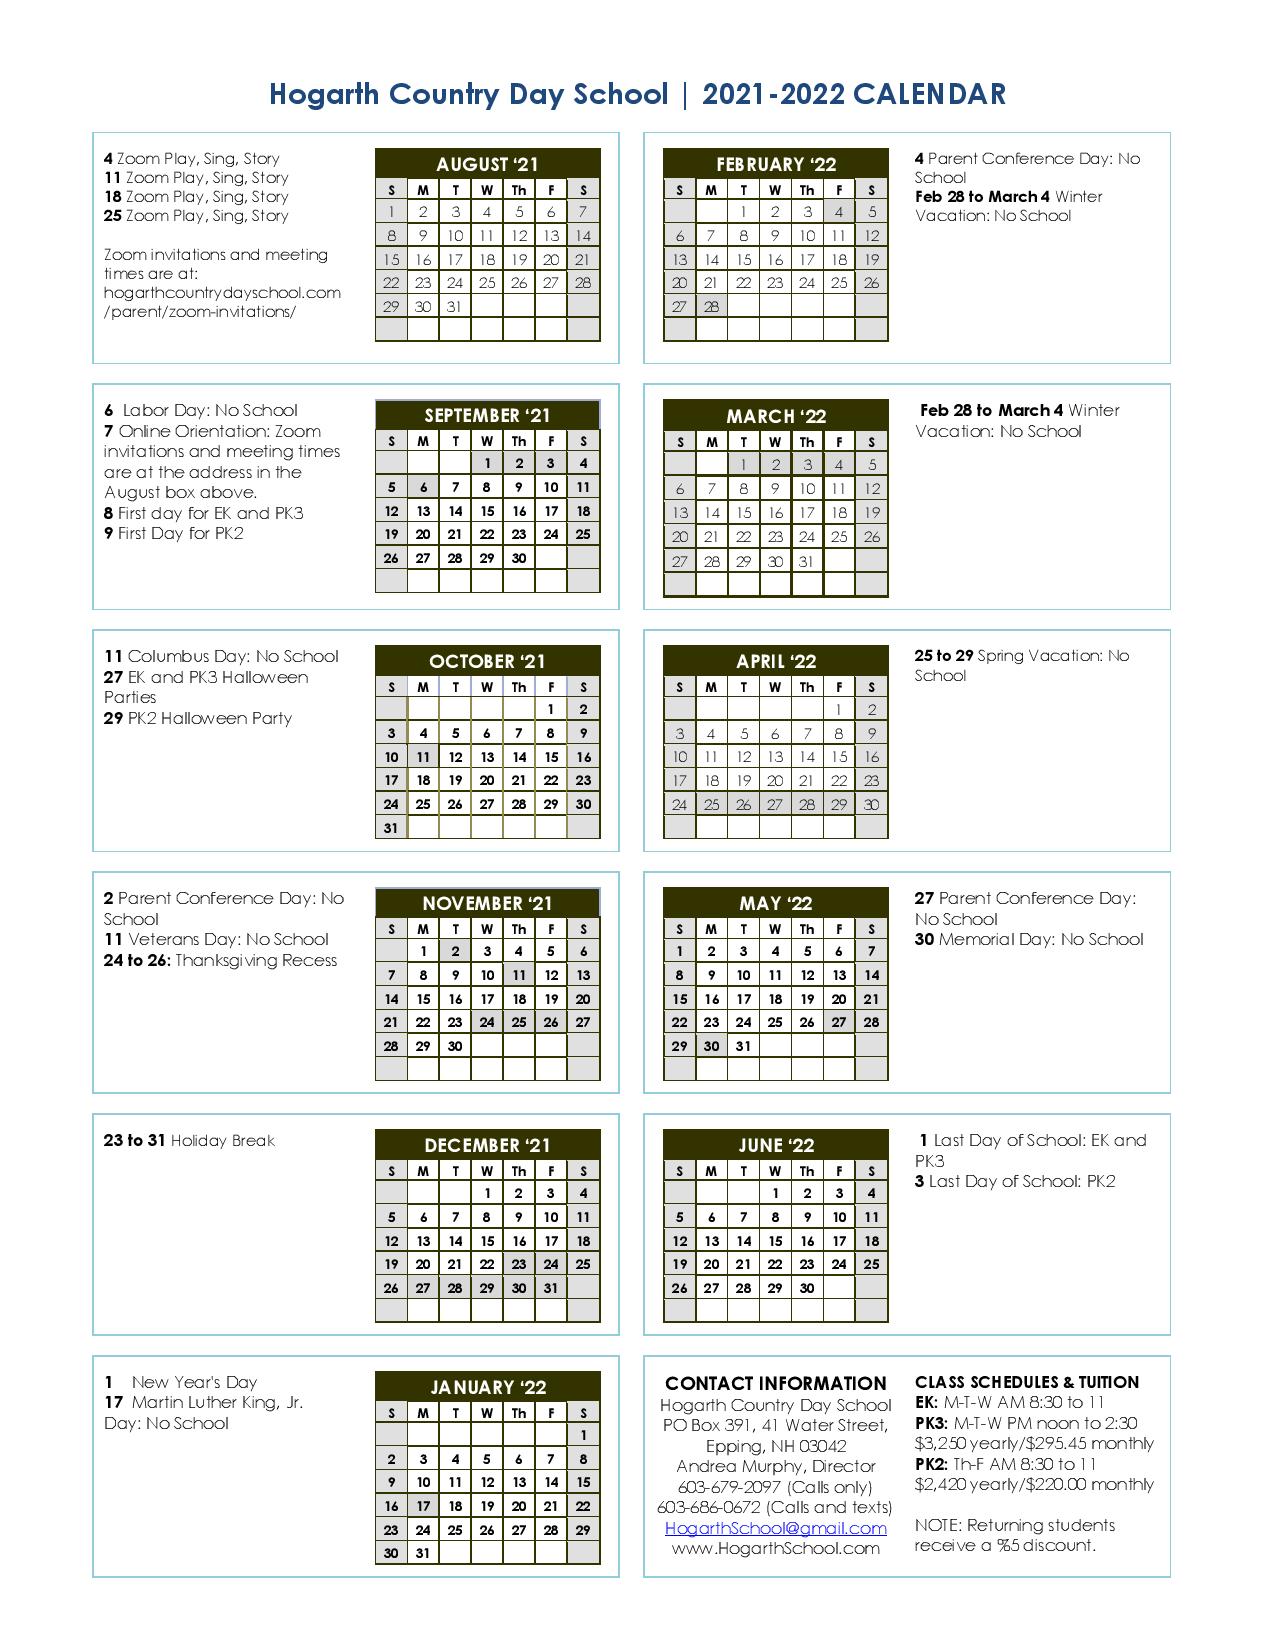 Tufts Academic Calendar 2022 2023 Current Academic Calendar | Hogarth Country Day School